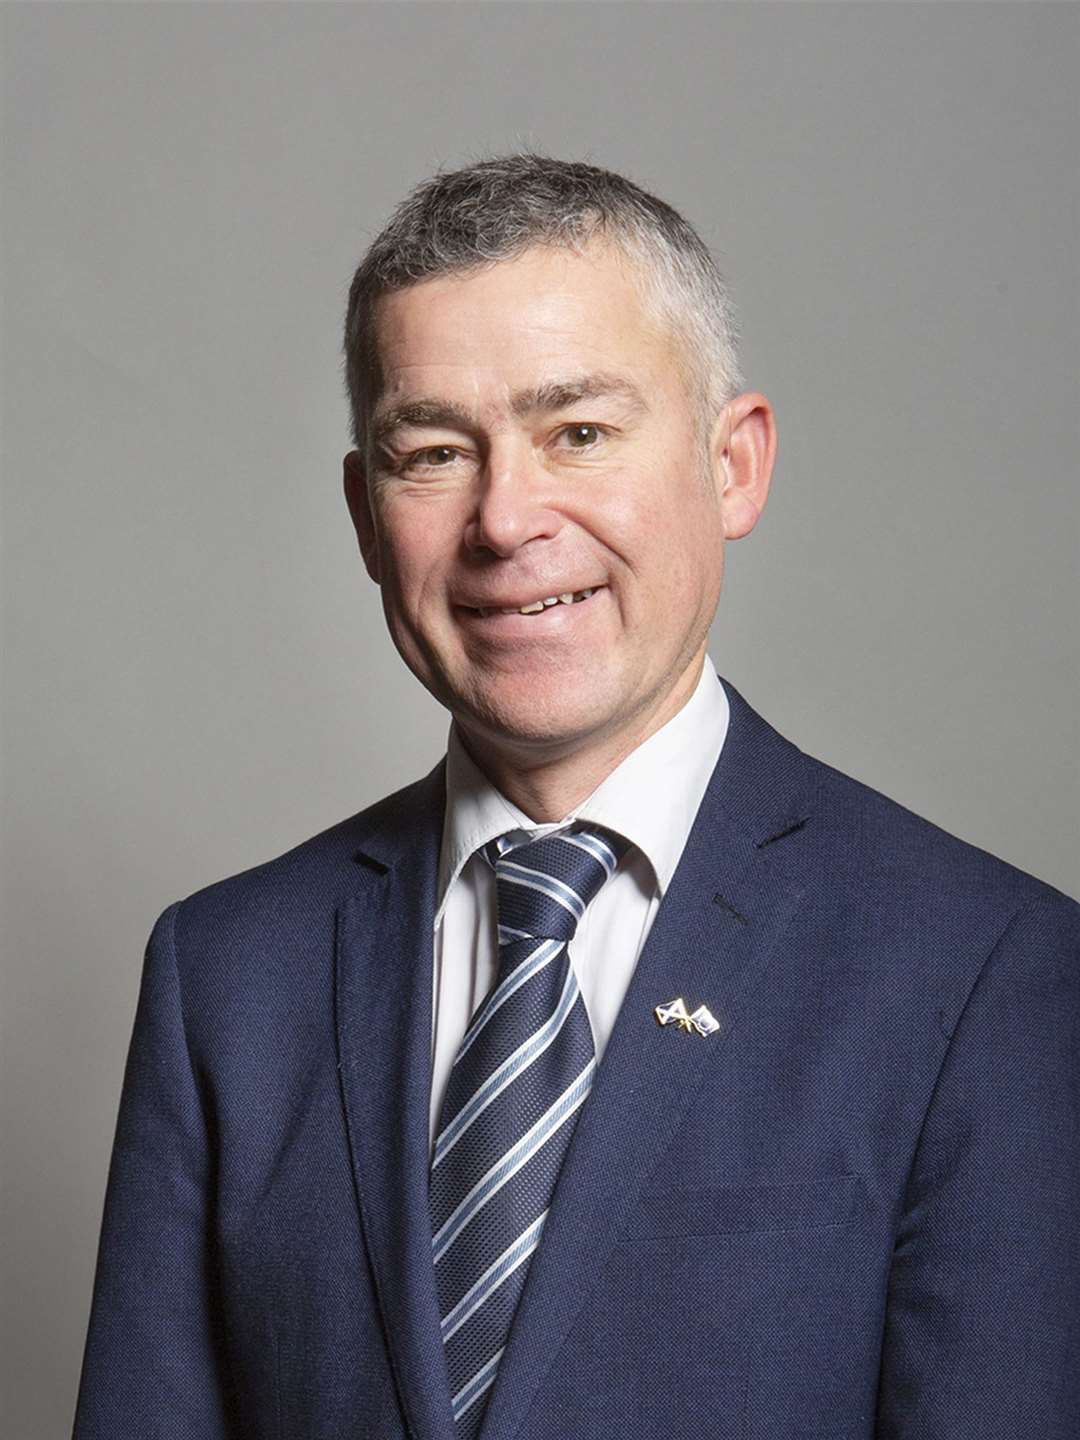 Allan Brown, Member of Parliament for Kilmarnock and Loudoun.